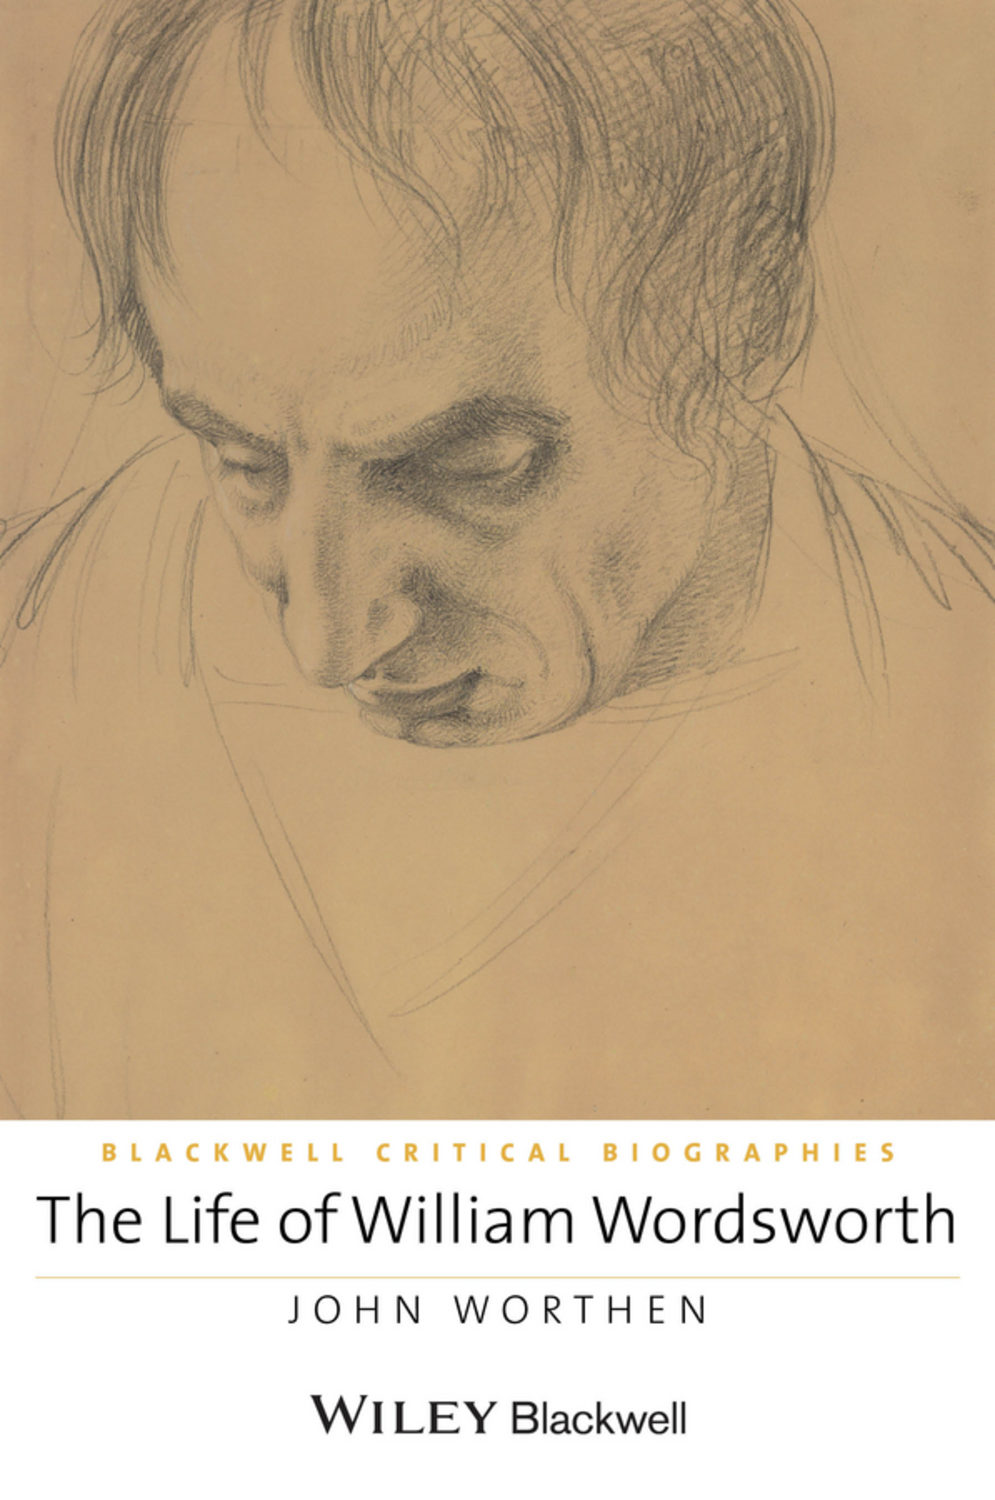 biography of william wordsworth pdf